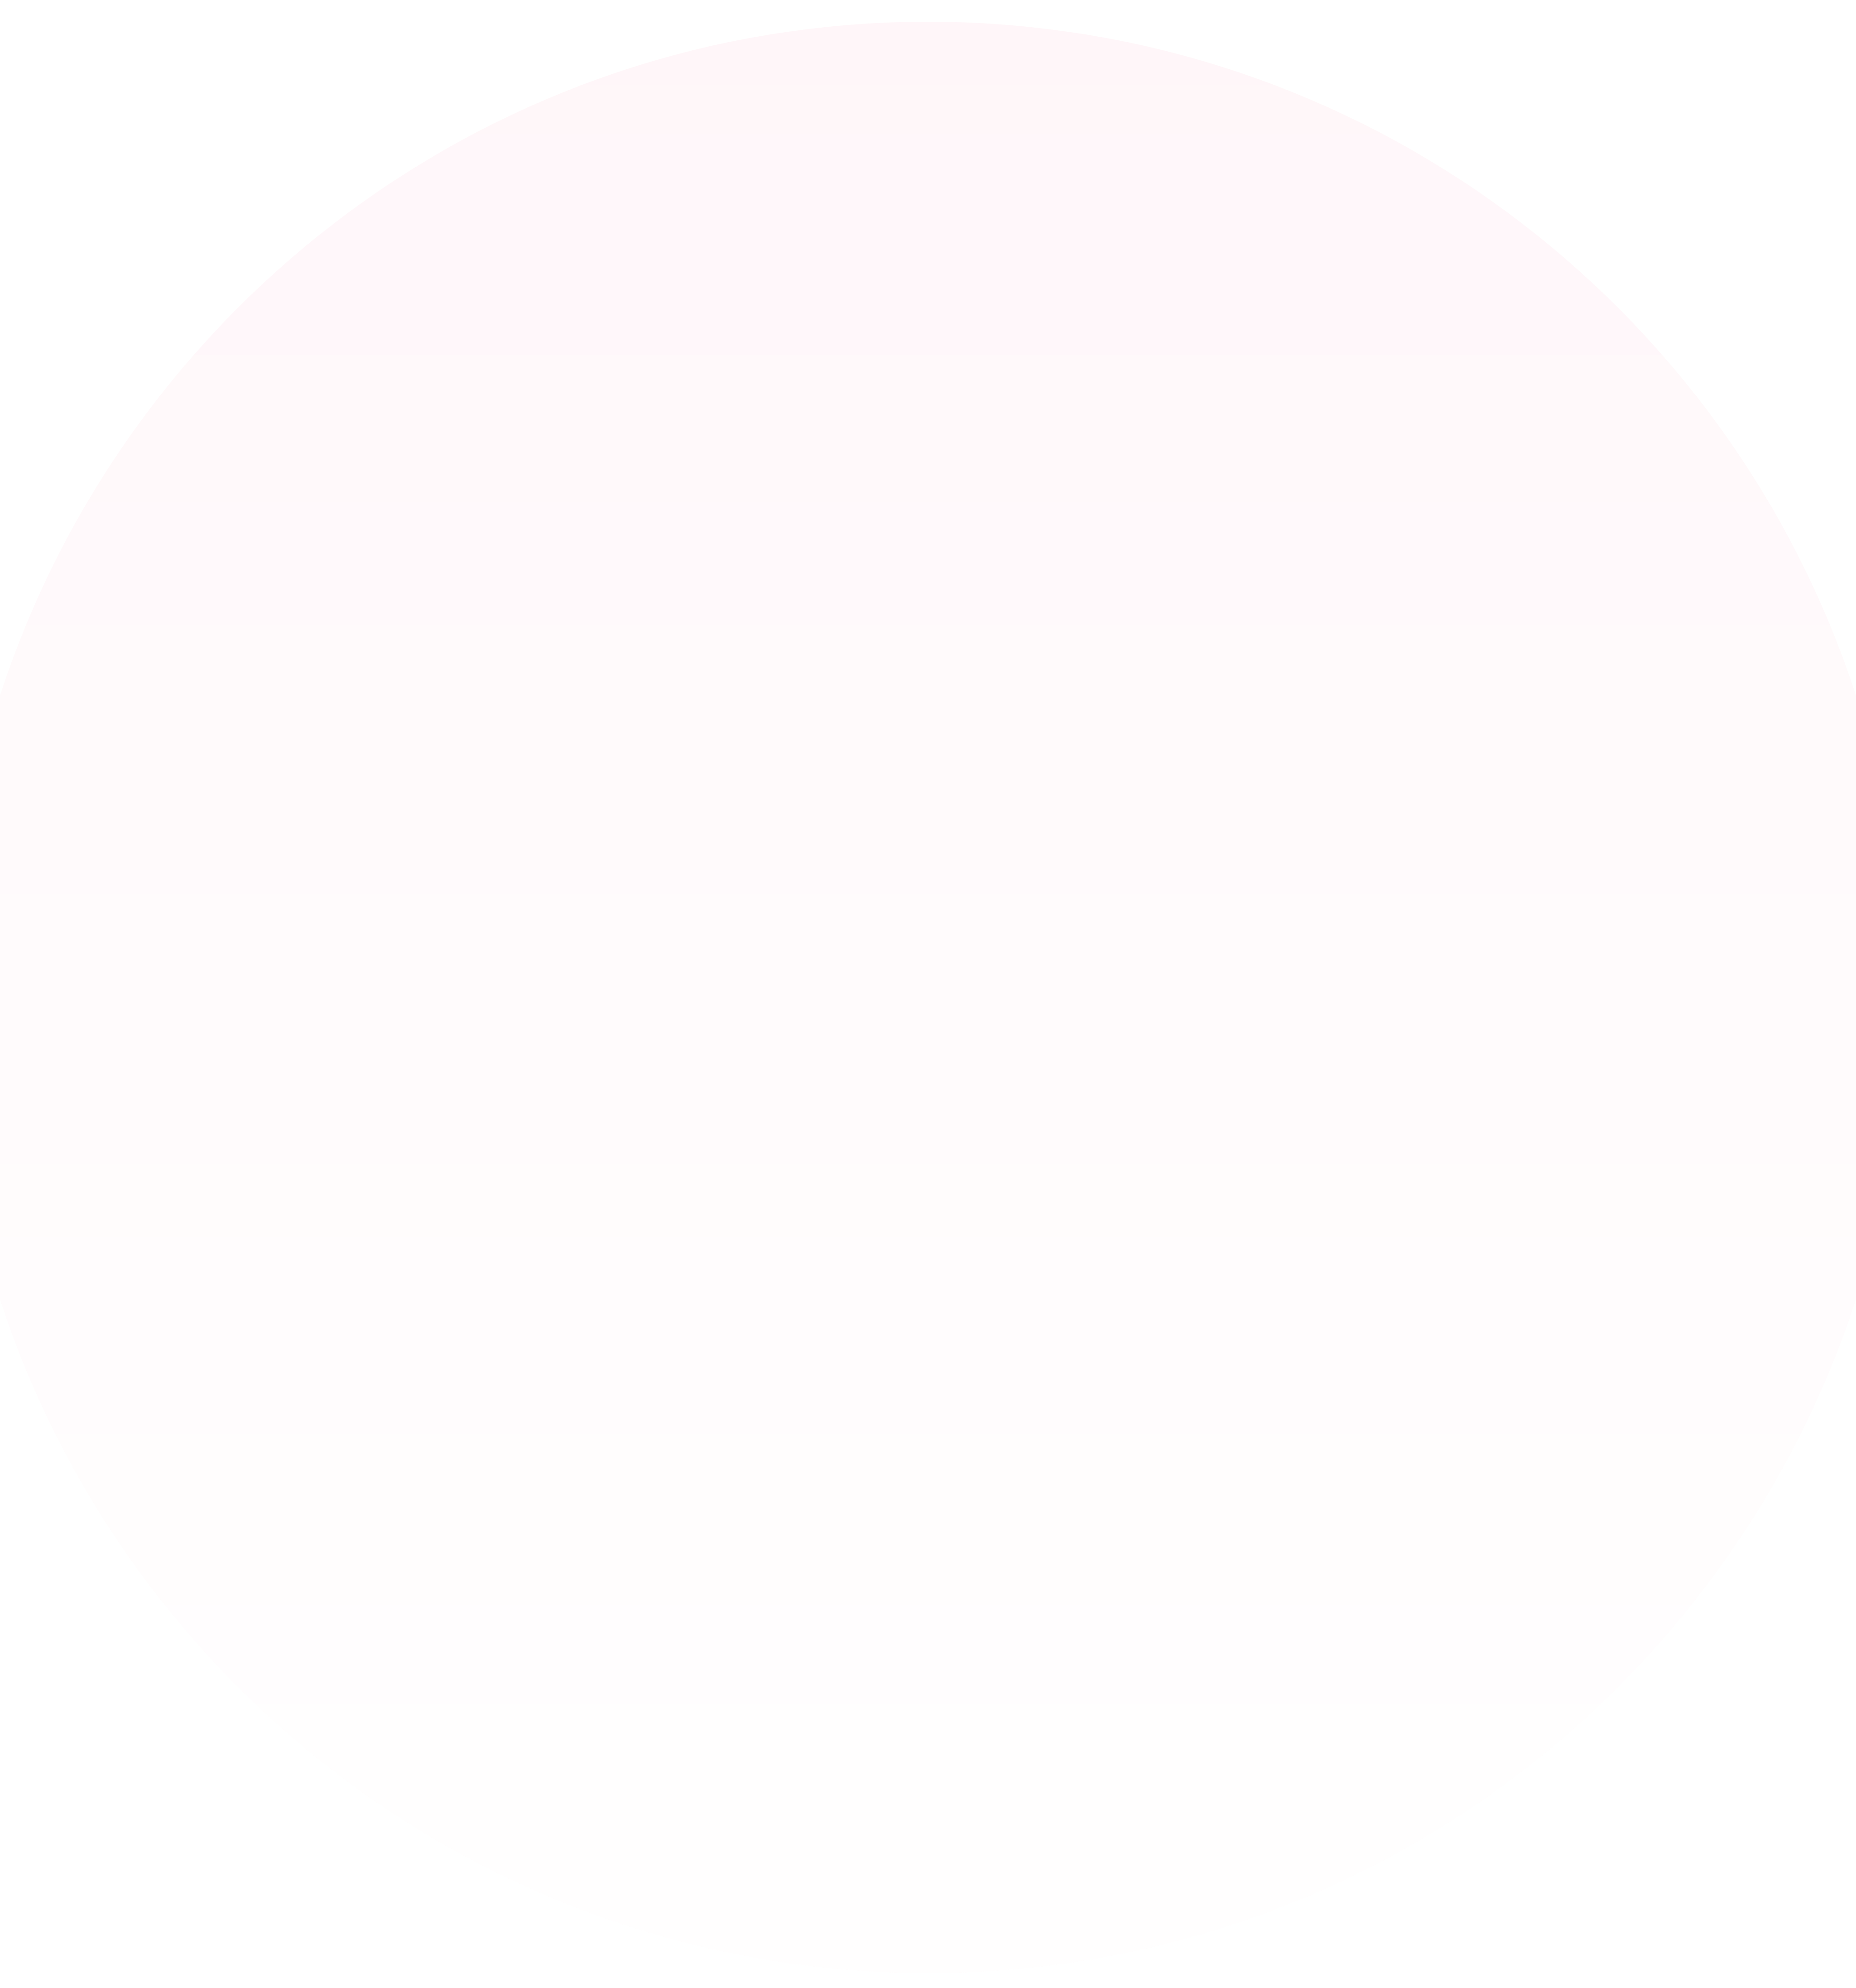 Middle big circle image